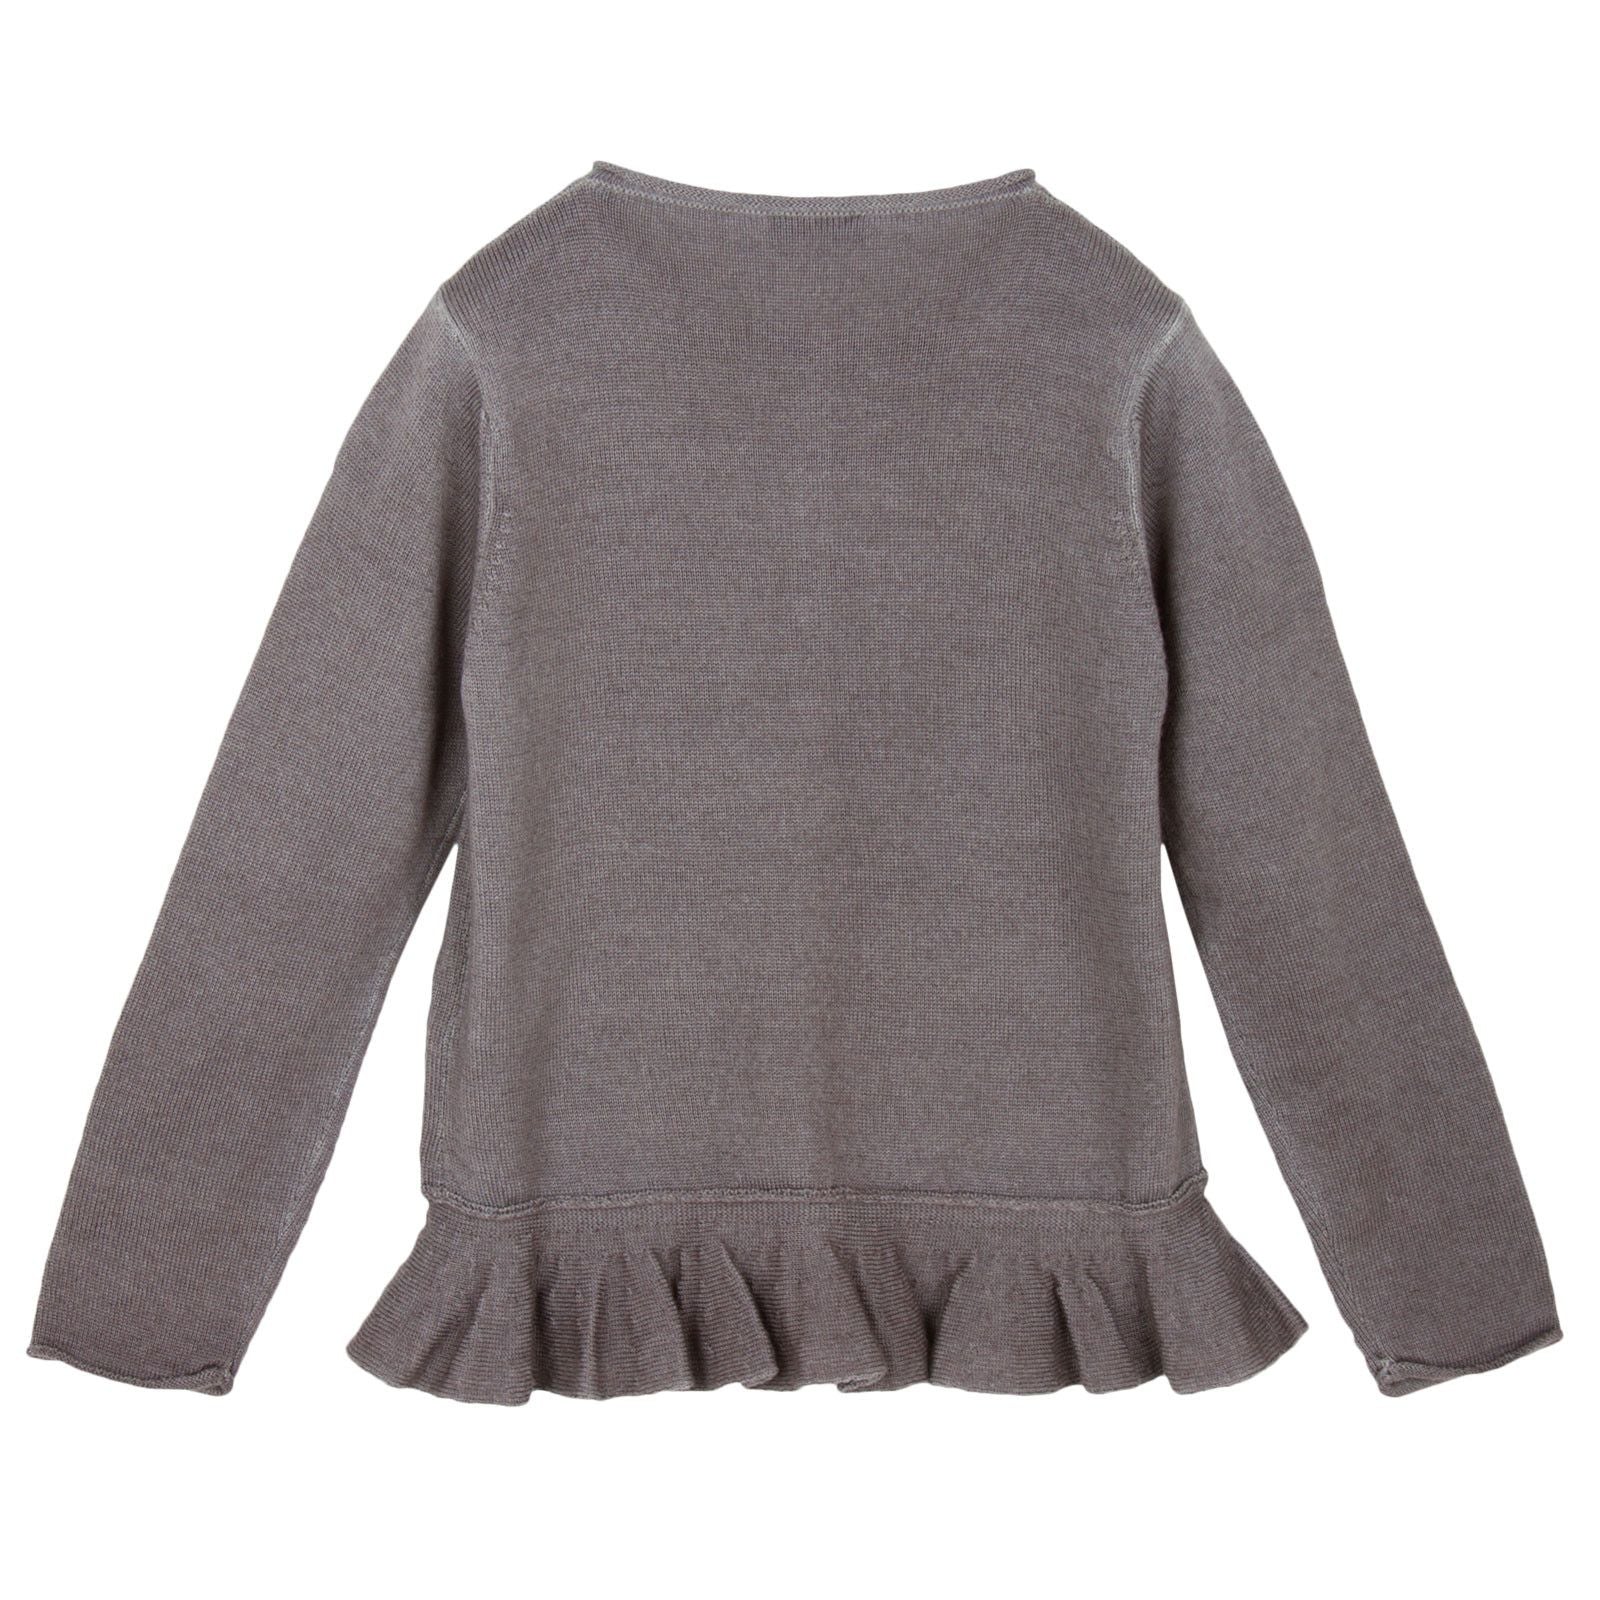 Girls Dark Grey Knitted Cardigan With Peplum Hem - CÉMAROSE | Children's Fashion Store - 2